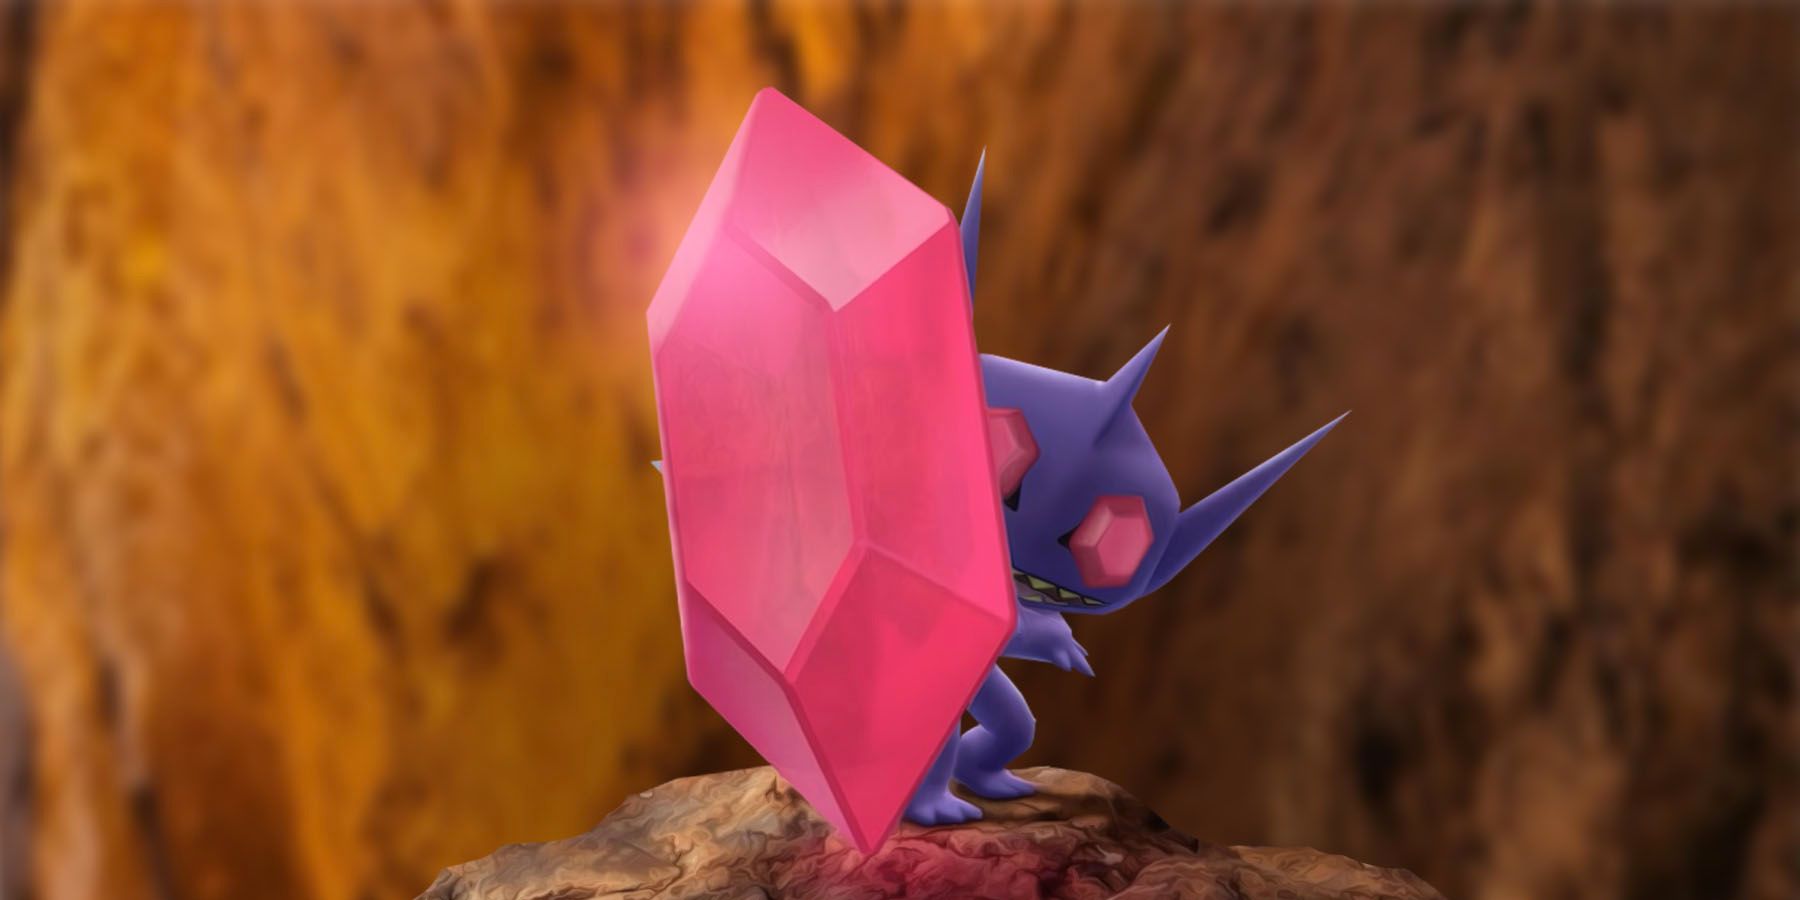 Pokémon Go Mega Gardevoir weaknesses, counters and moveset explained